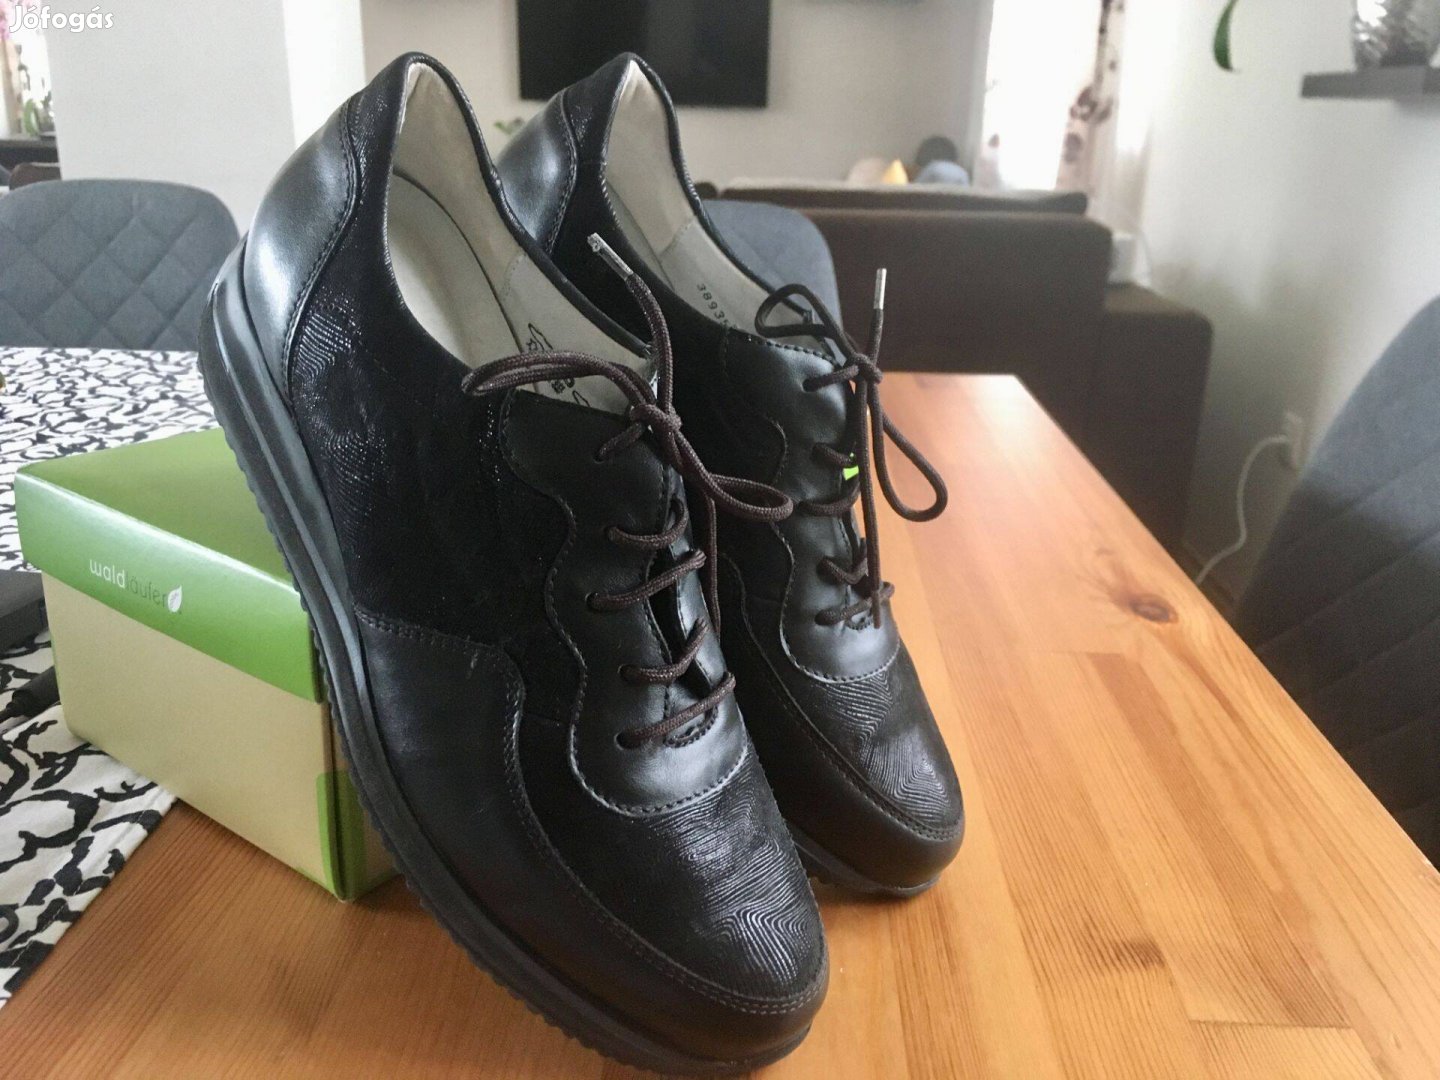 Waldlaufer kényelmi bőr cipő 40-es